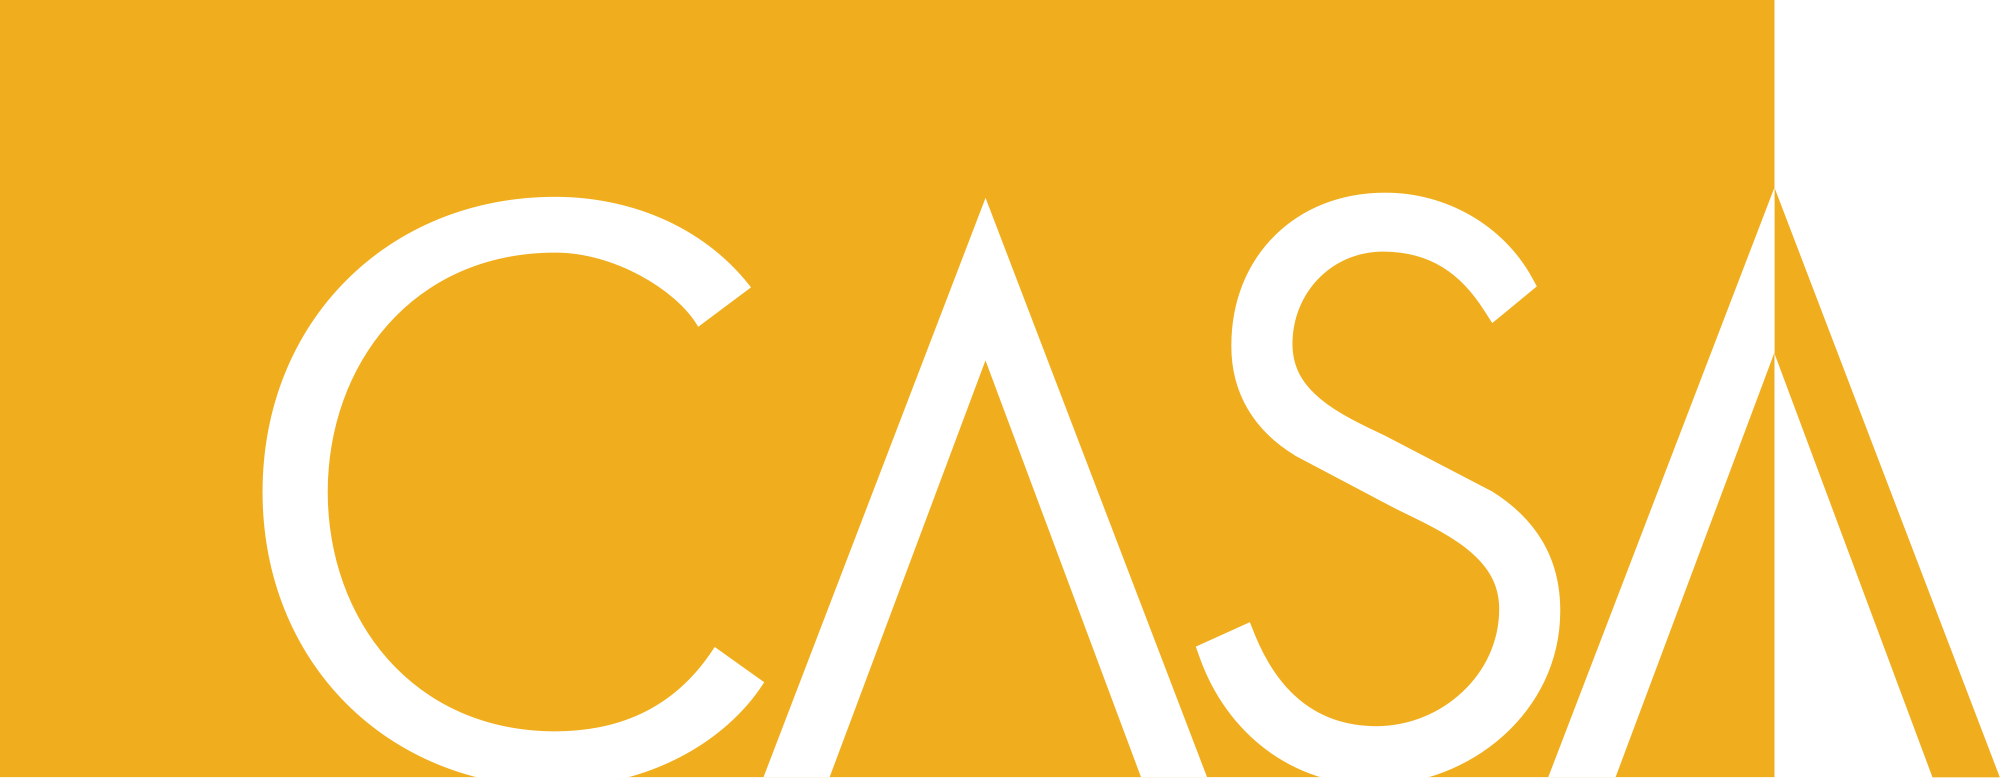 Casa Logo - File:CASA logo.svg - Wikimedia Commons